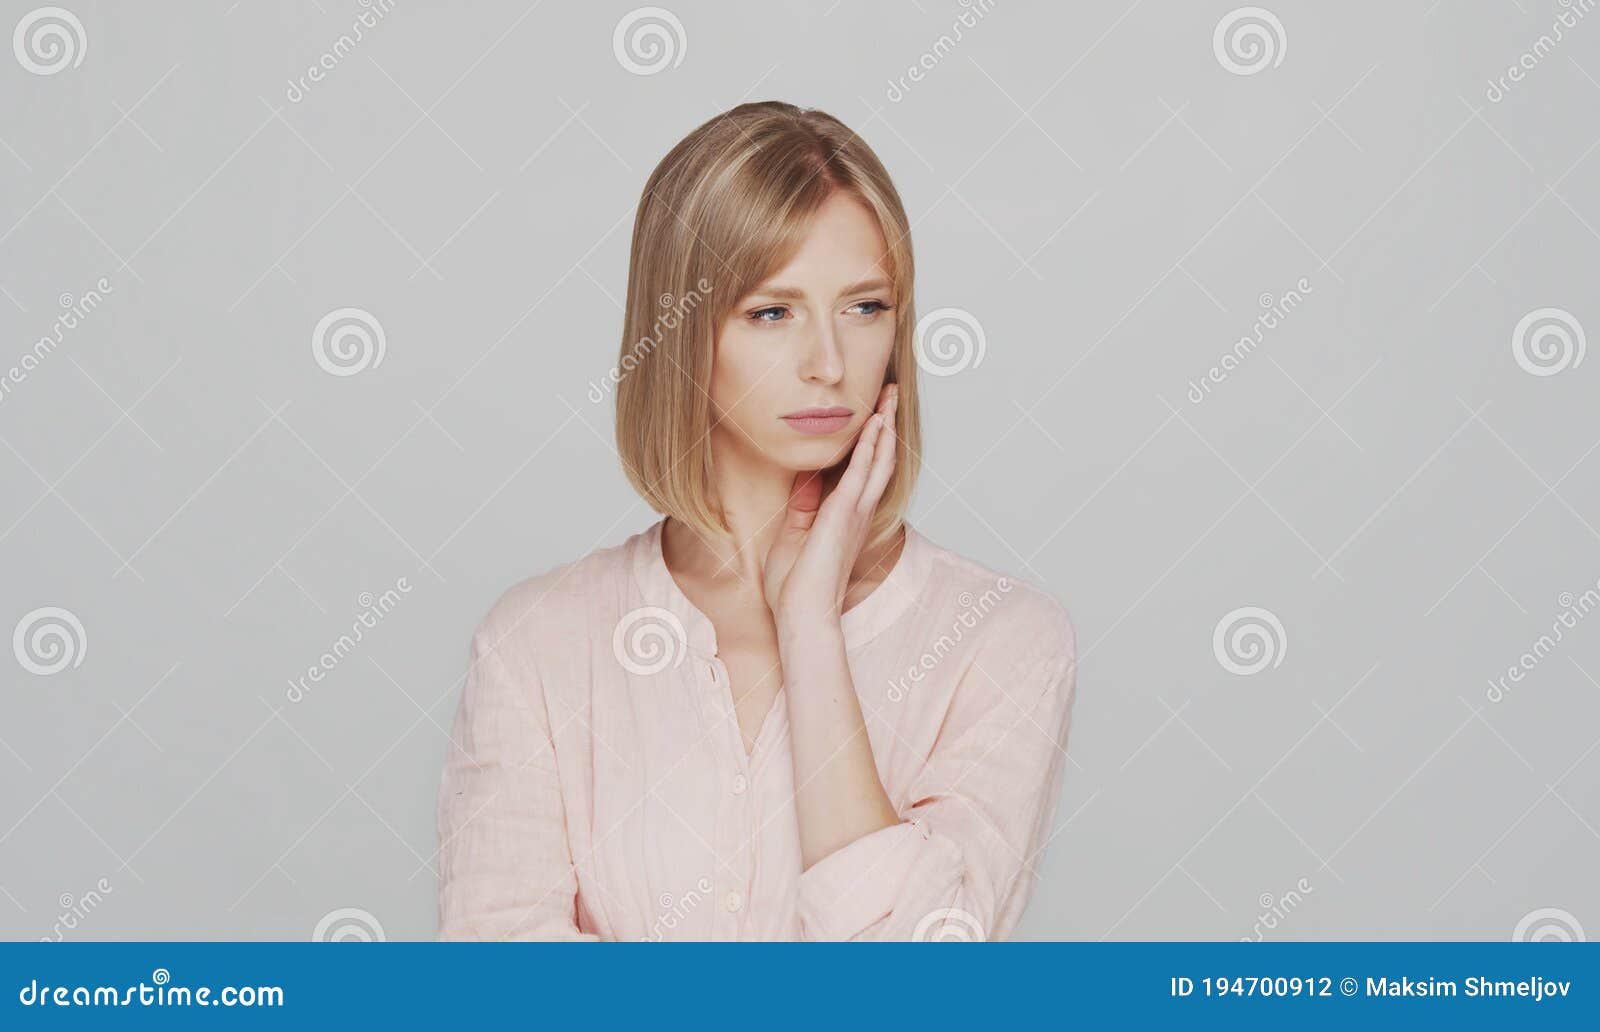 studio portrait of sad and depressive young blond woman.